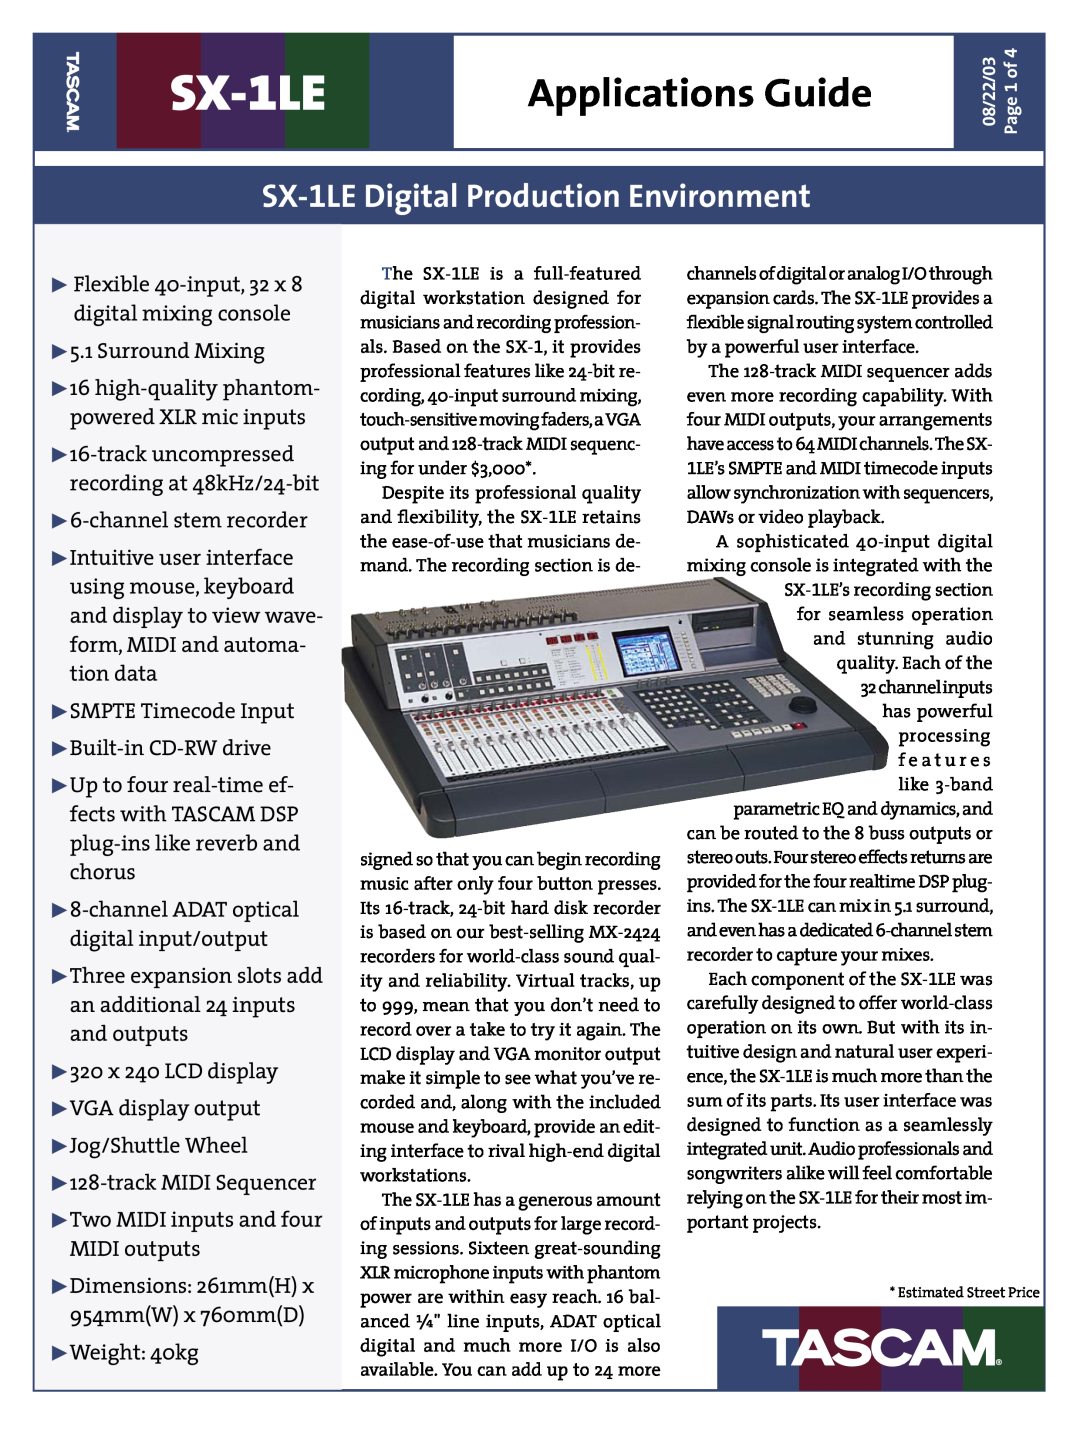 Tascam dimensions Applications Guide, SX-1LEDigital Production Environment 